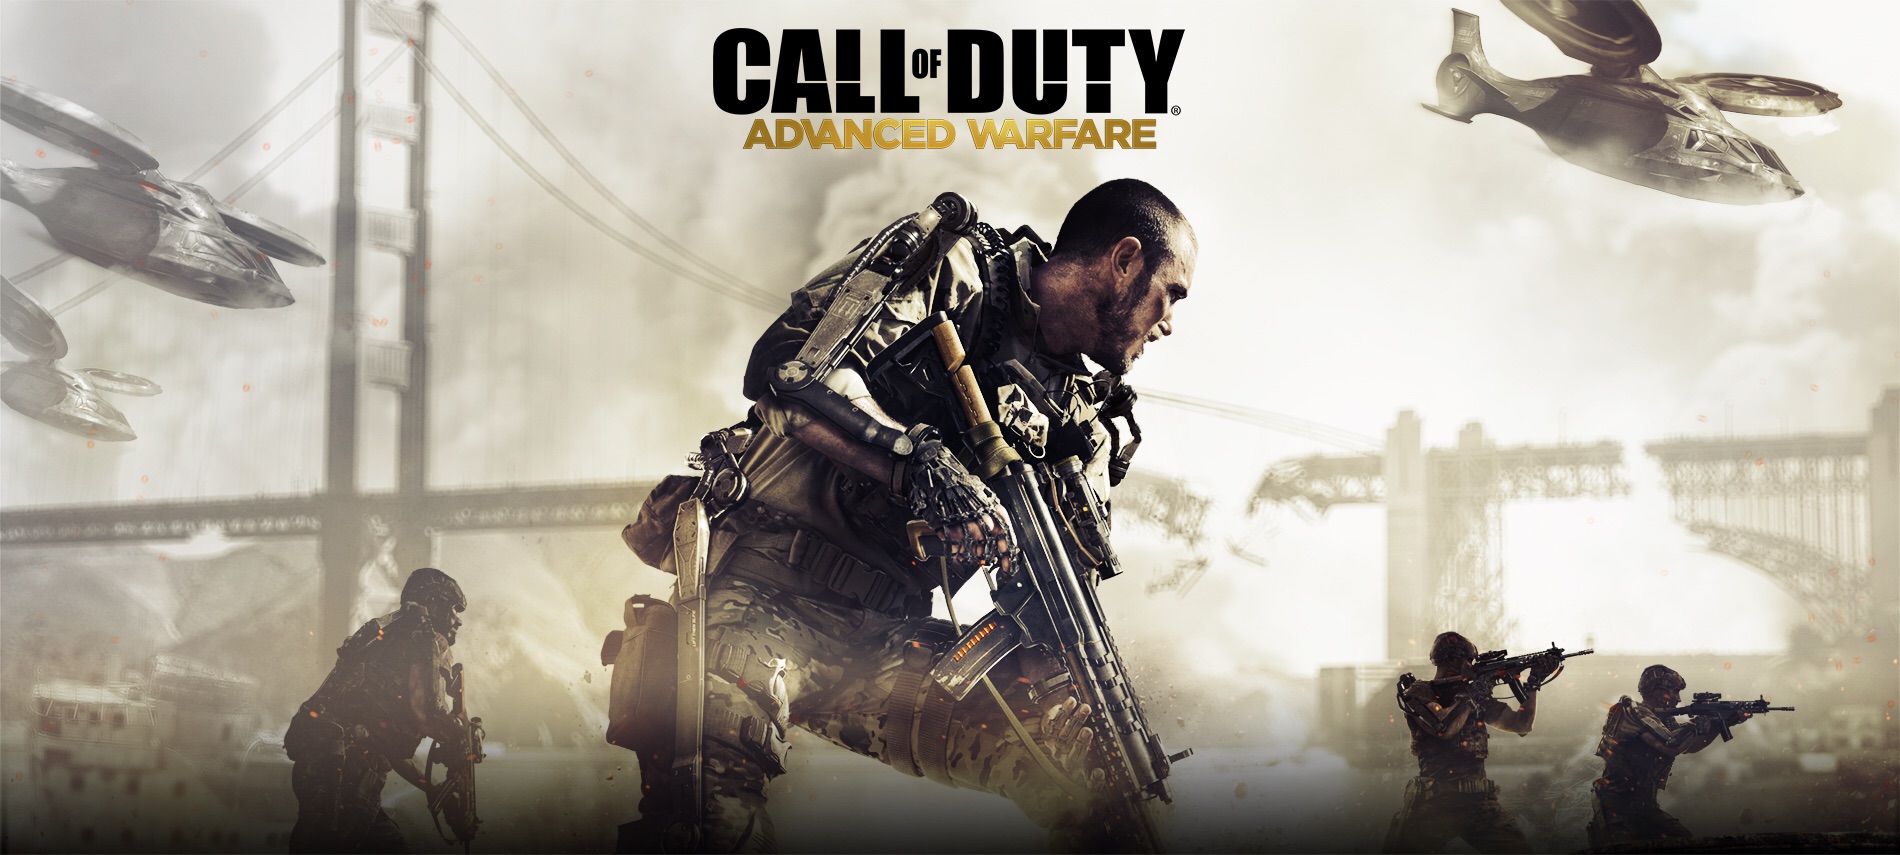 Аккаунт xbox 360 с Call Of Duty: Adwanced Warfare